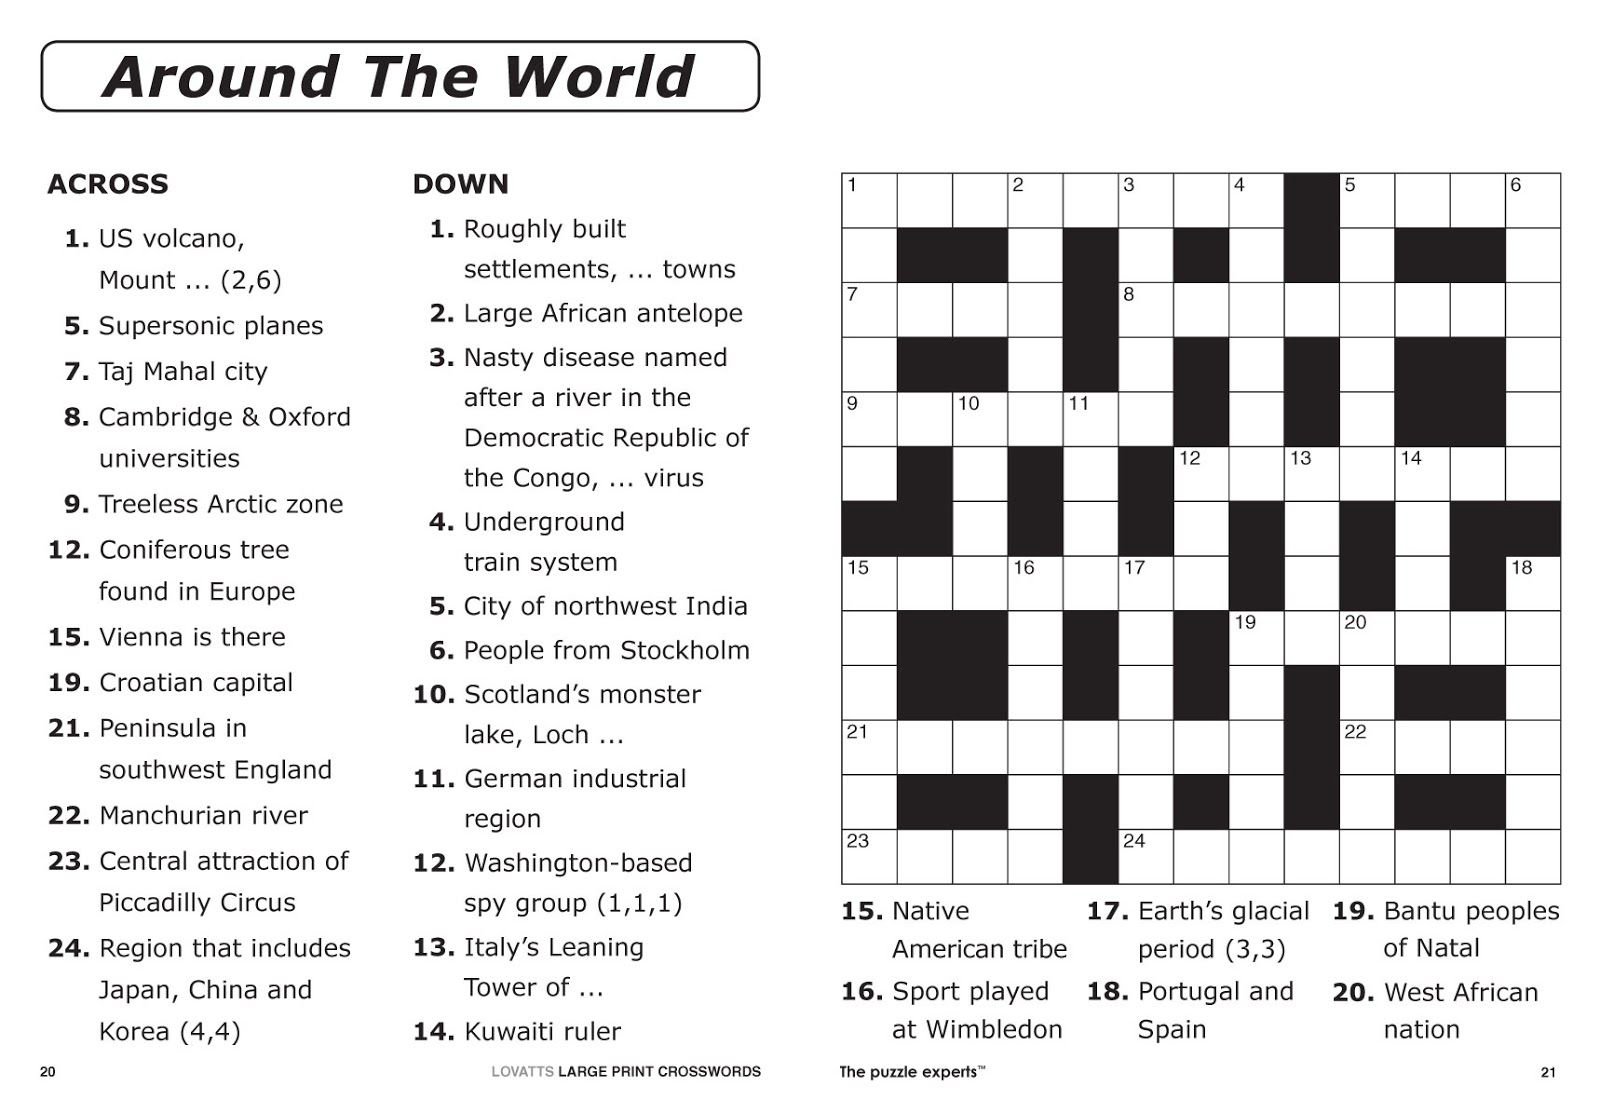 Free Printable Large Print Crossword Puzzles | M3U8 - Easy Printable Crossword Puzzles Large Print